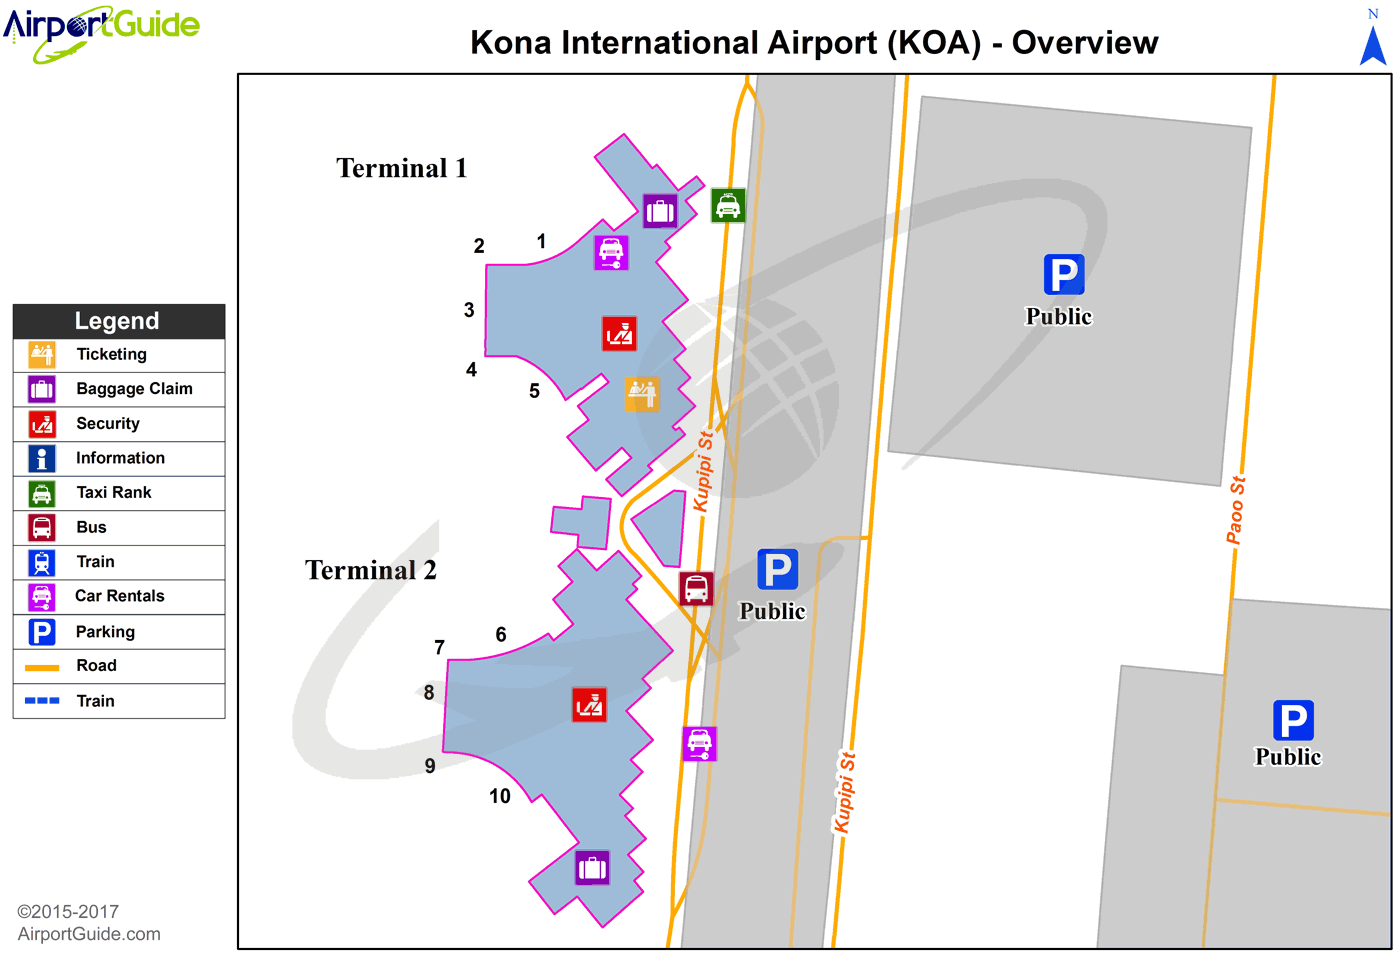 KOA Overview Map 